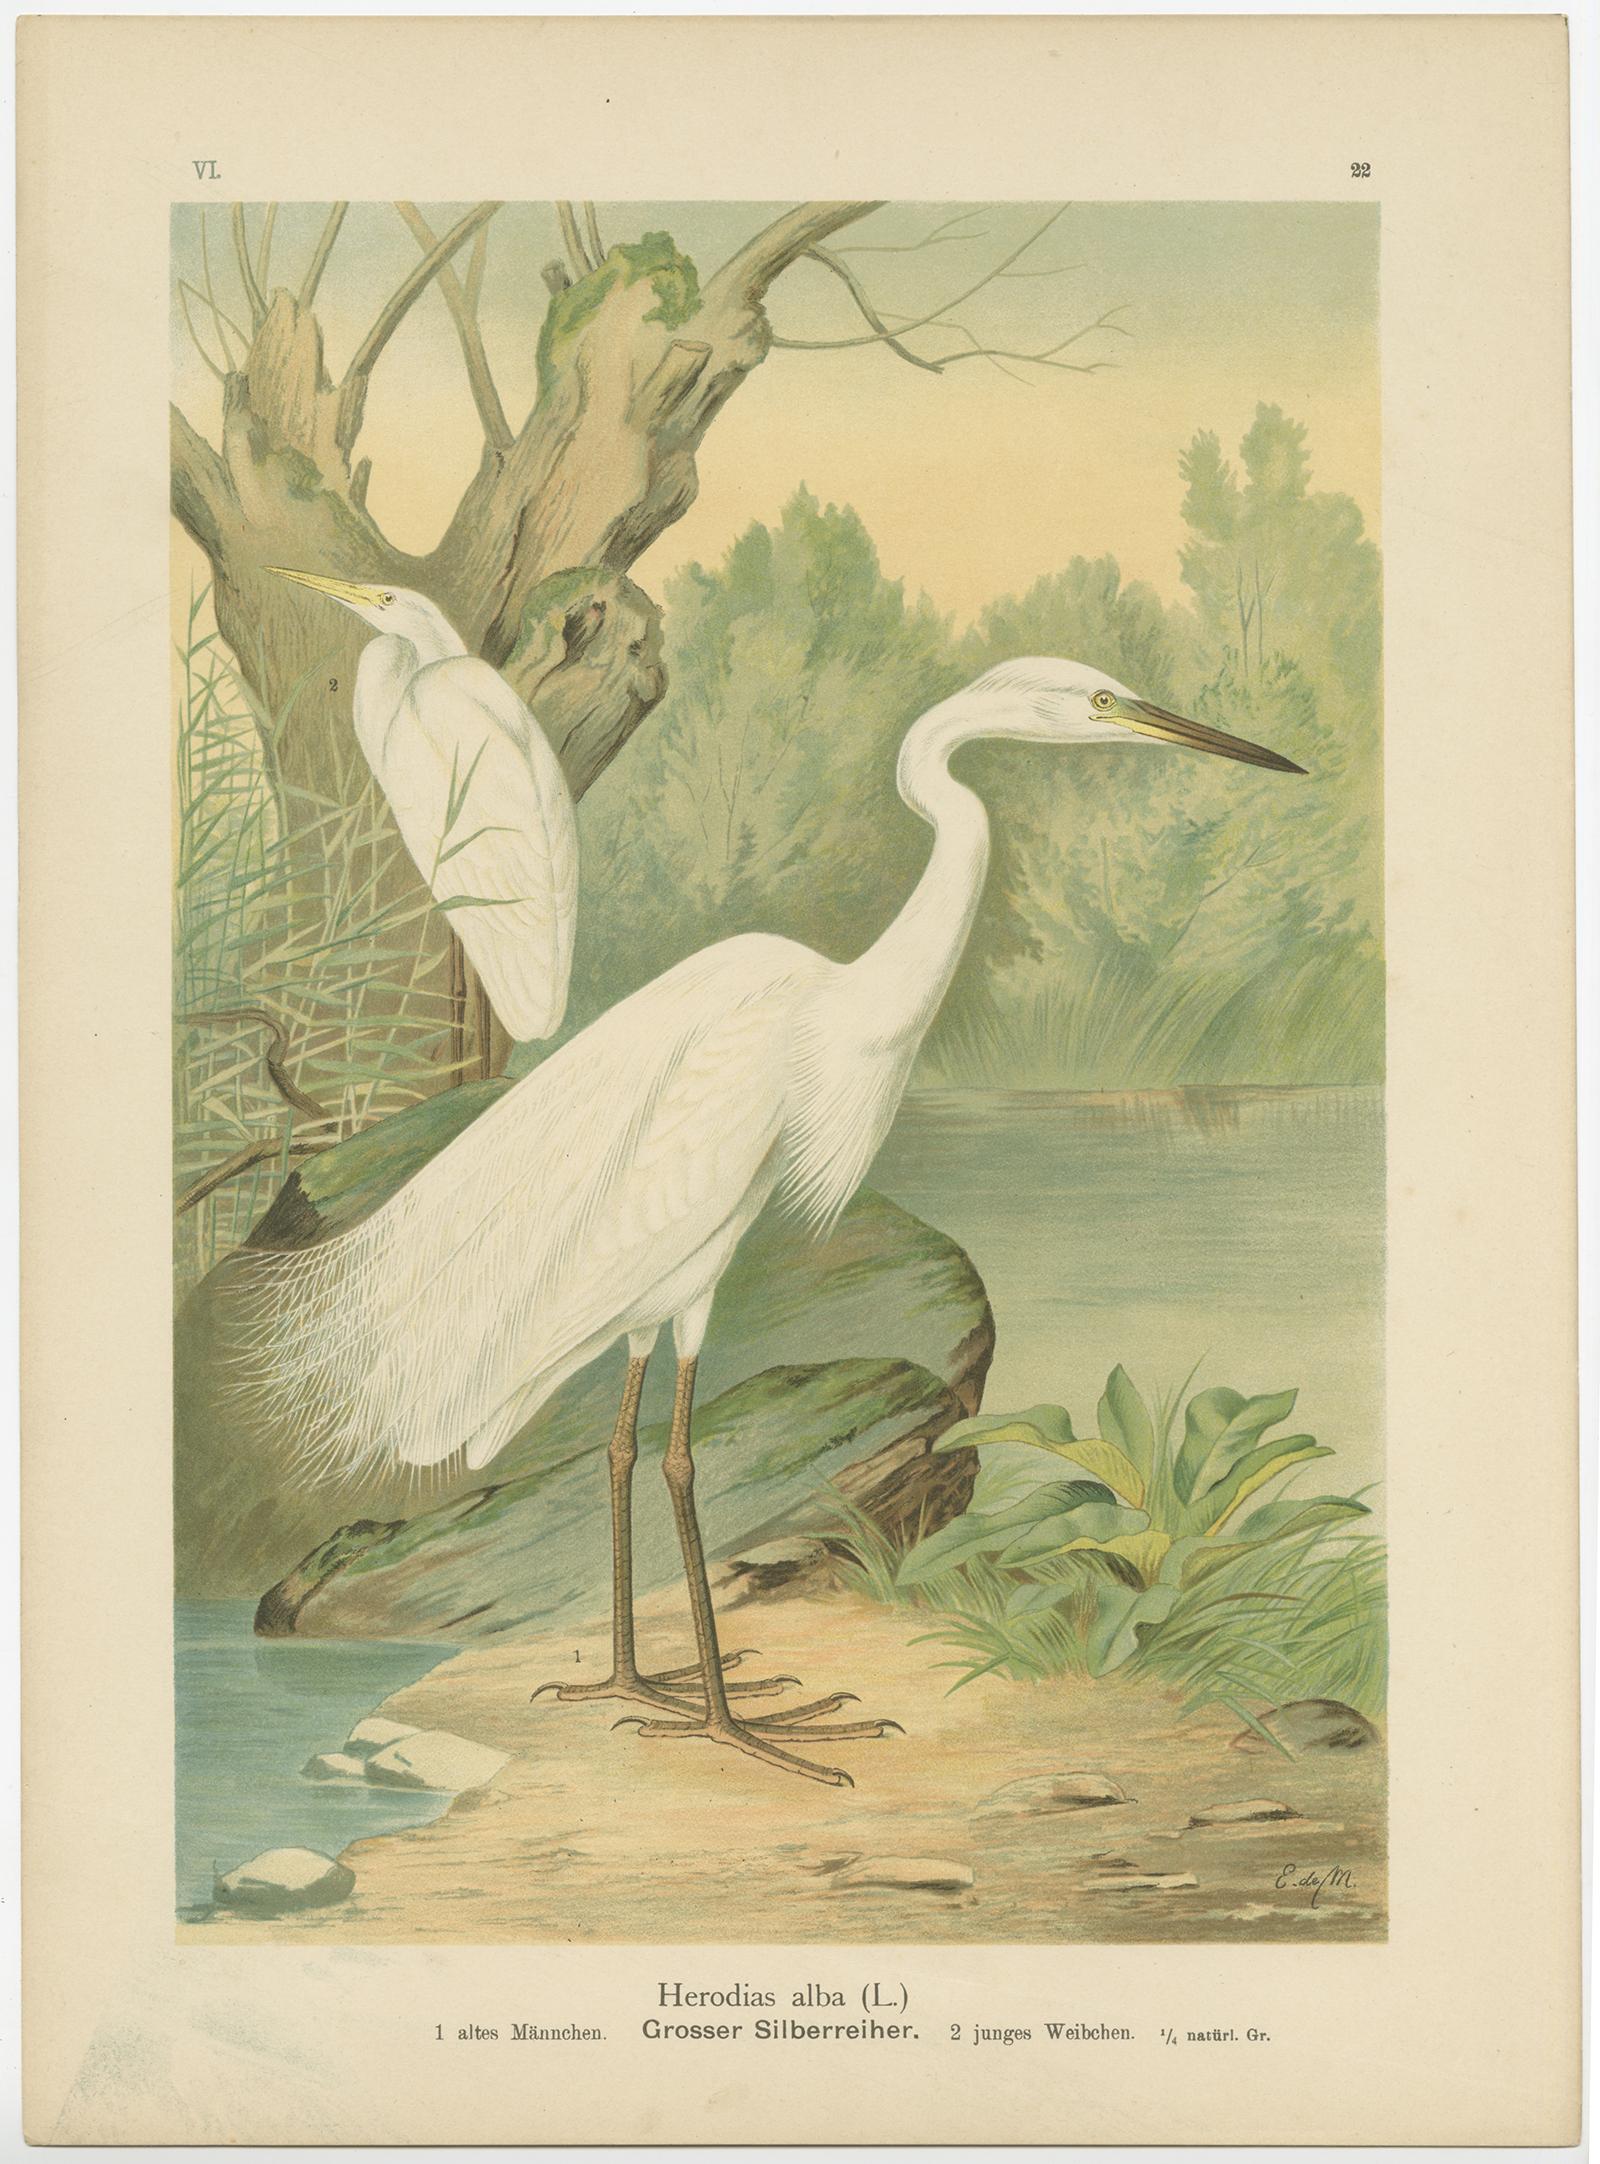 Antique bird print titled 'Herodias alba - Grosser Silberreiher'. Chromolithograph of the Great White Egret or White Heron. This print originates from J.A. Naumann's 'Naturgeschichte der Vögel Mitteleuropas', published, circa 1895.